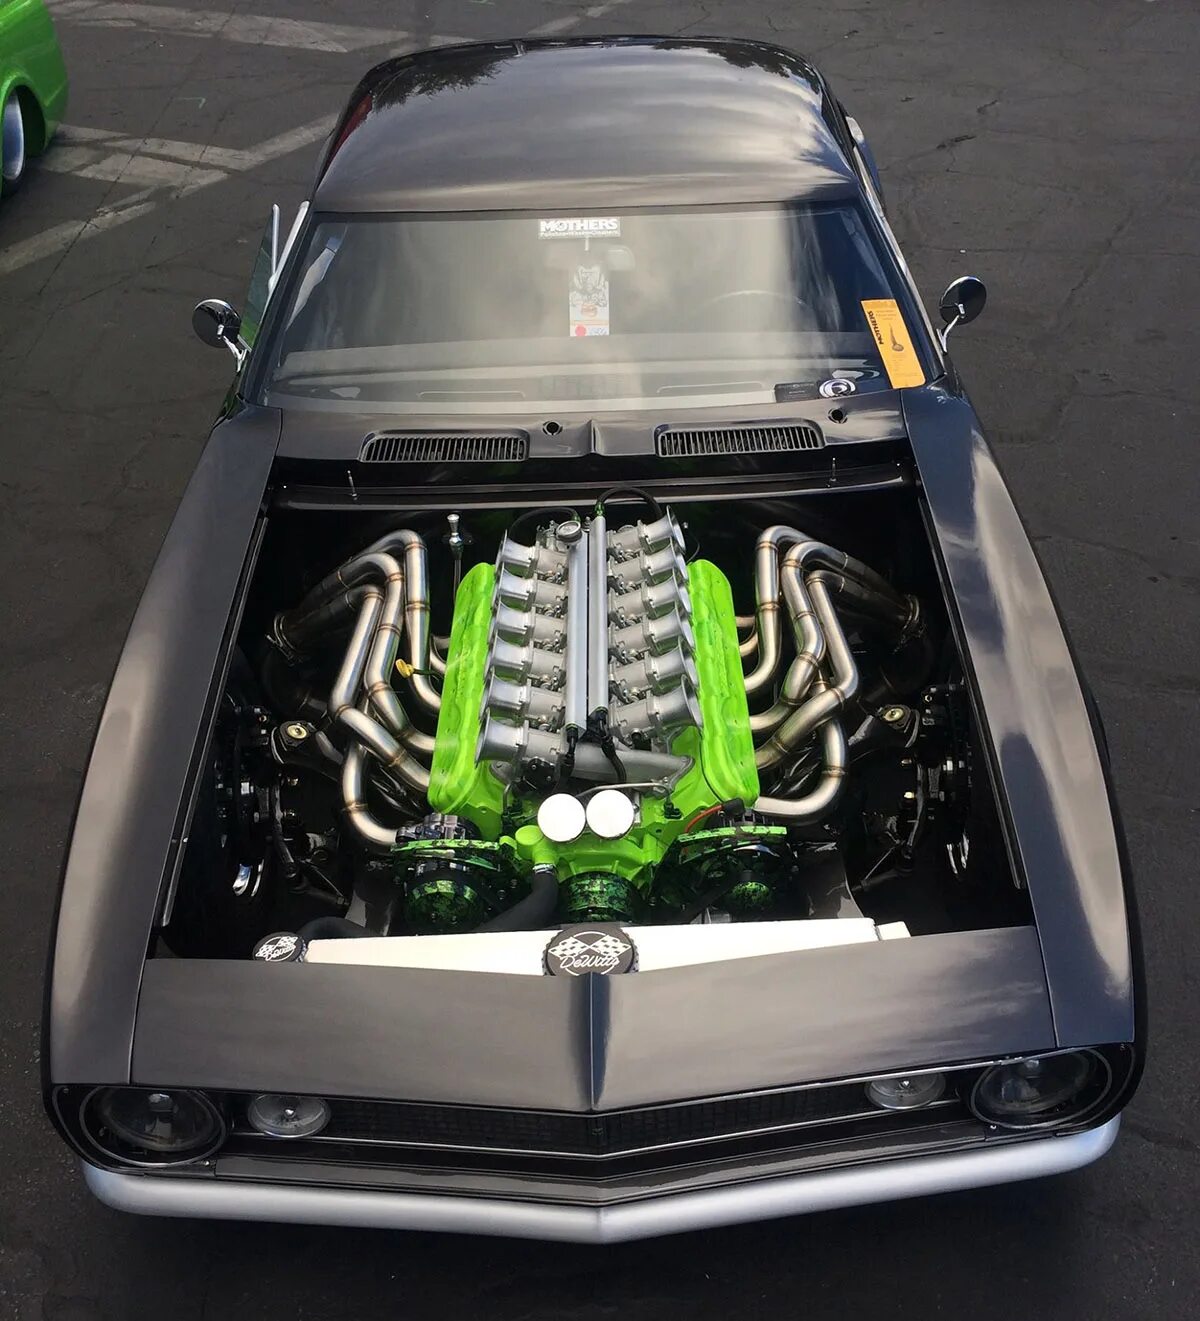 Двигатель v12 muscle car. V12 Twin Turbo с нагнетателем. Движок Челленджер v12. Dodge v12 engine. Super machine